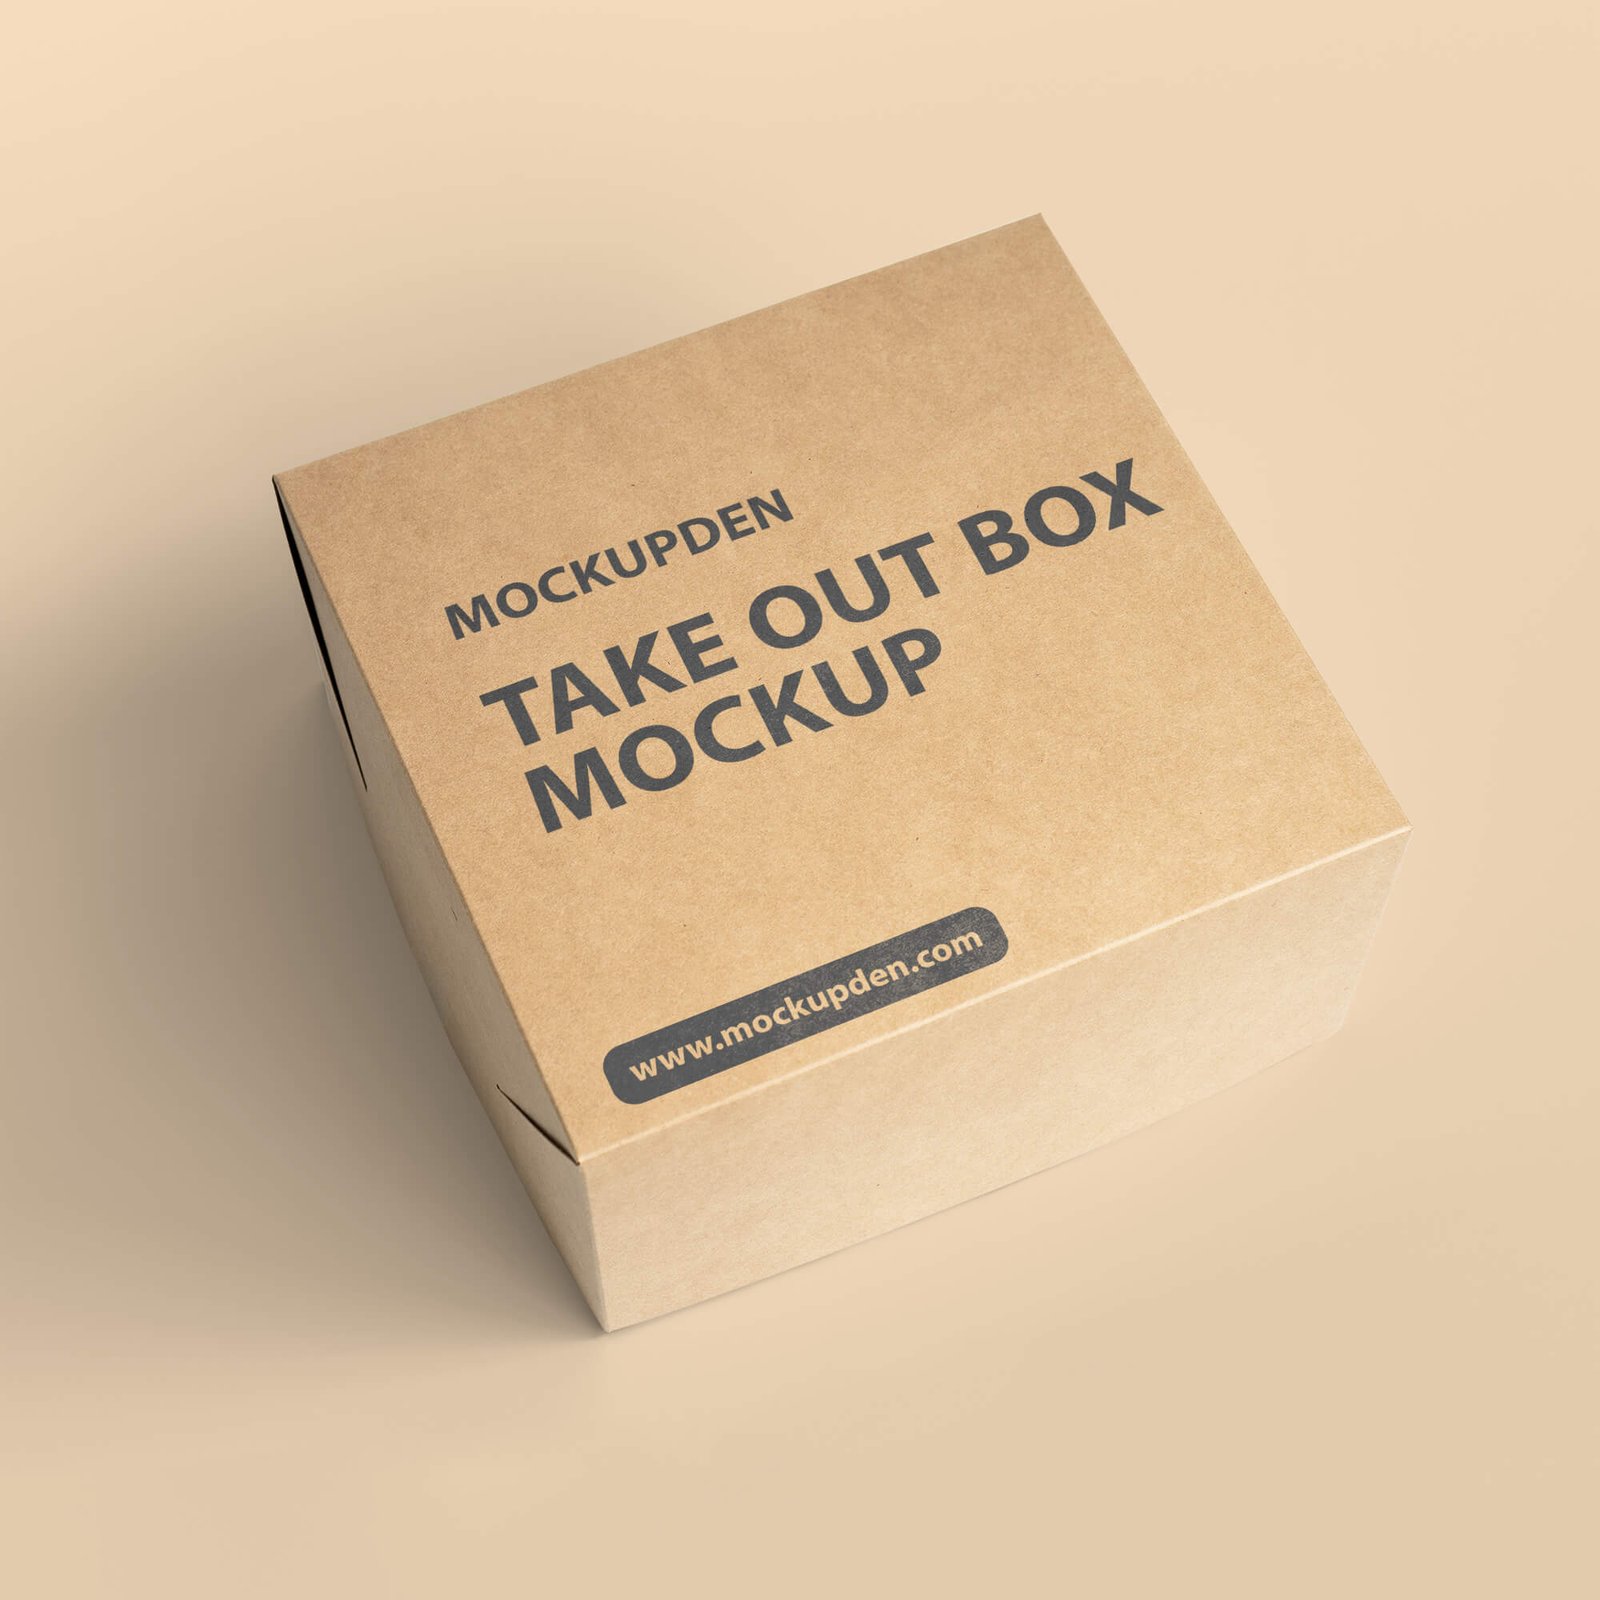 Free Take Out Box Mockup PSD Template